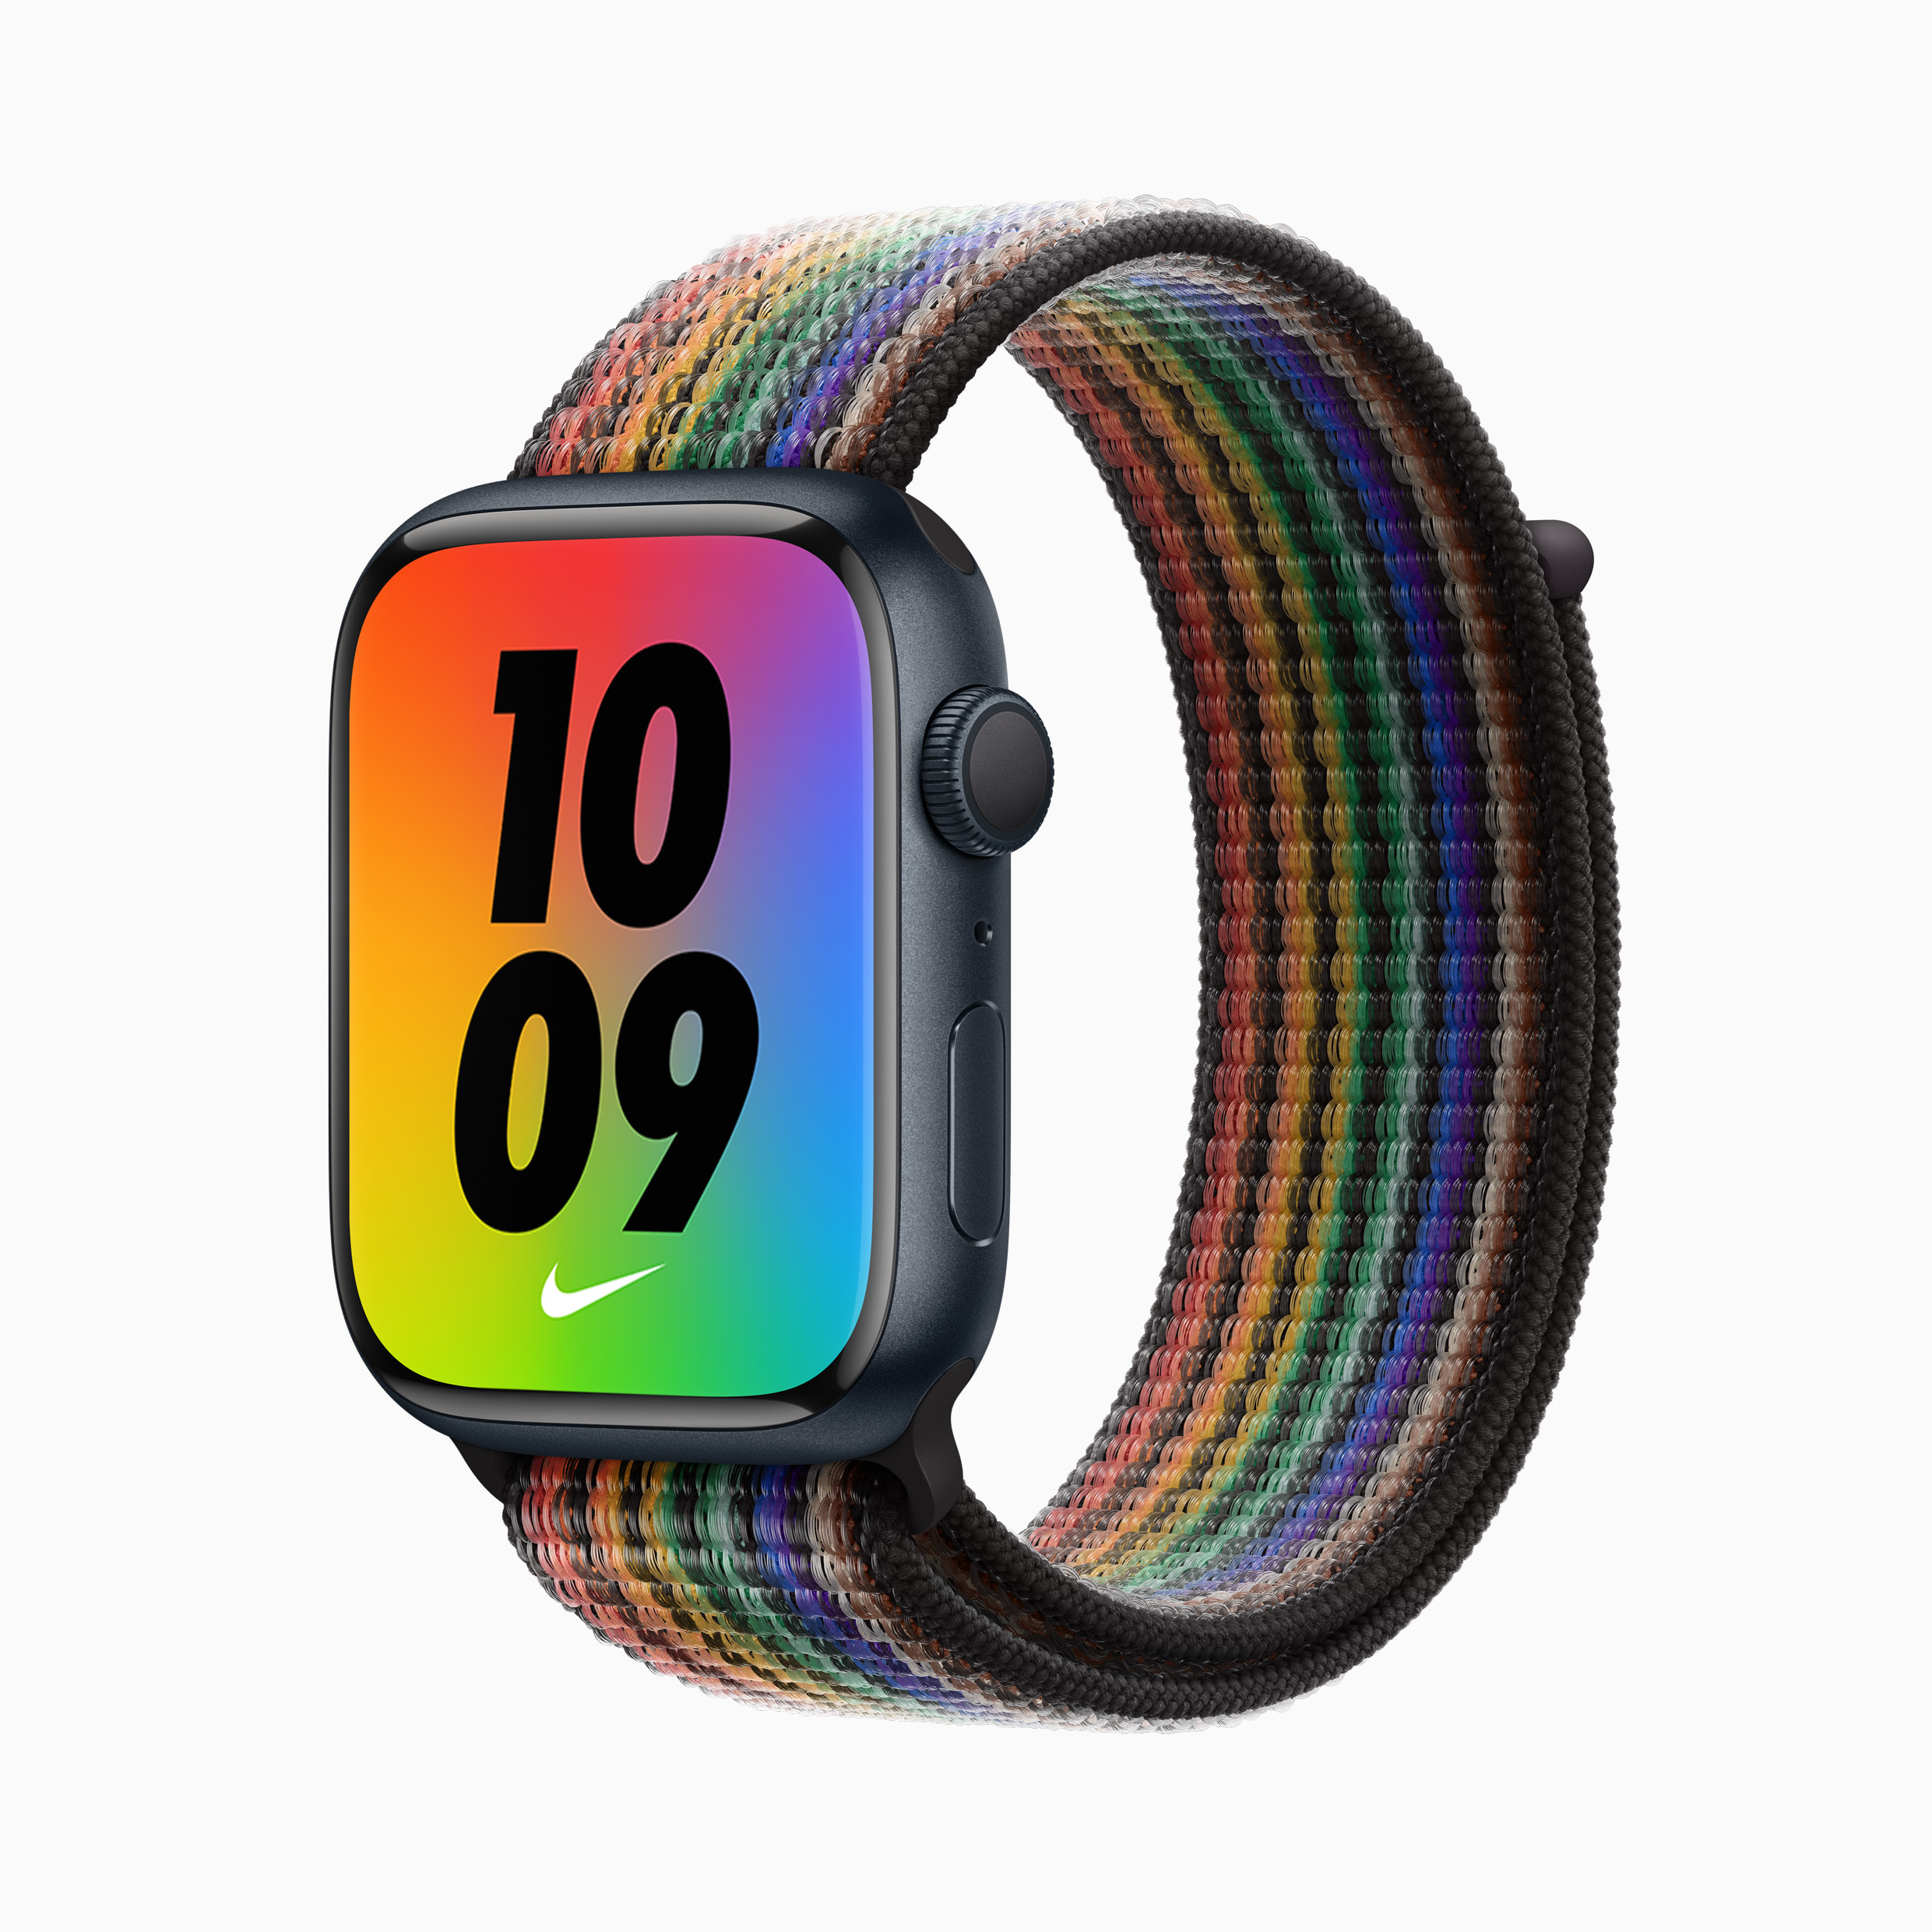 ai67-apple-logo-love-mania-rainbow 